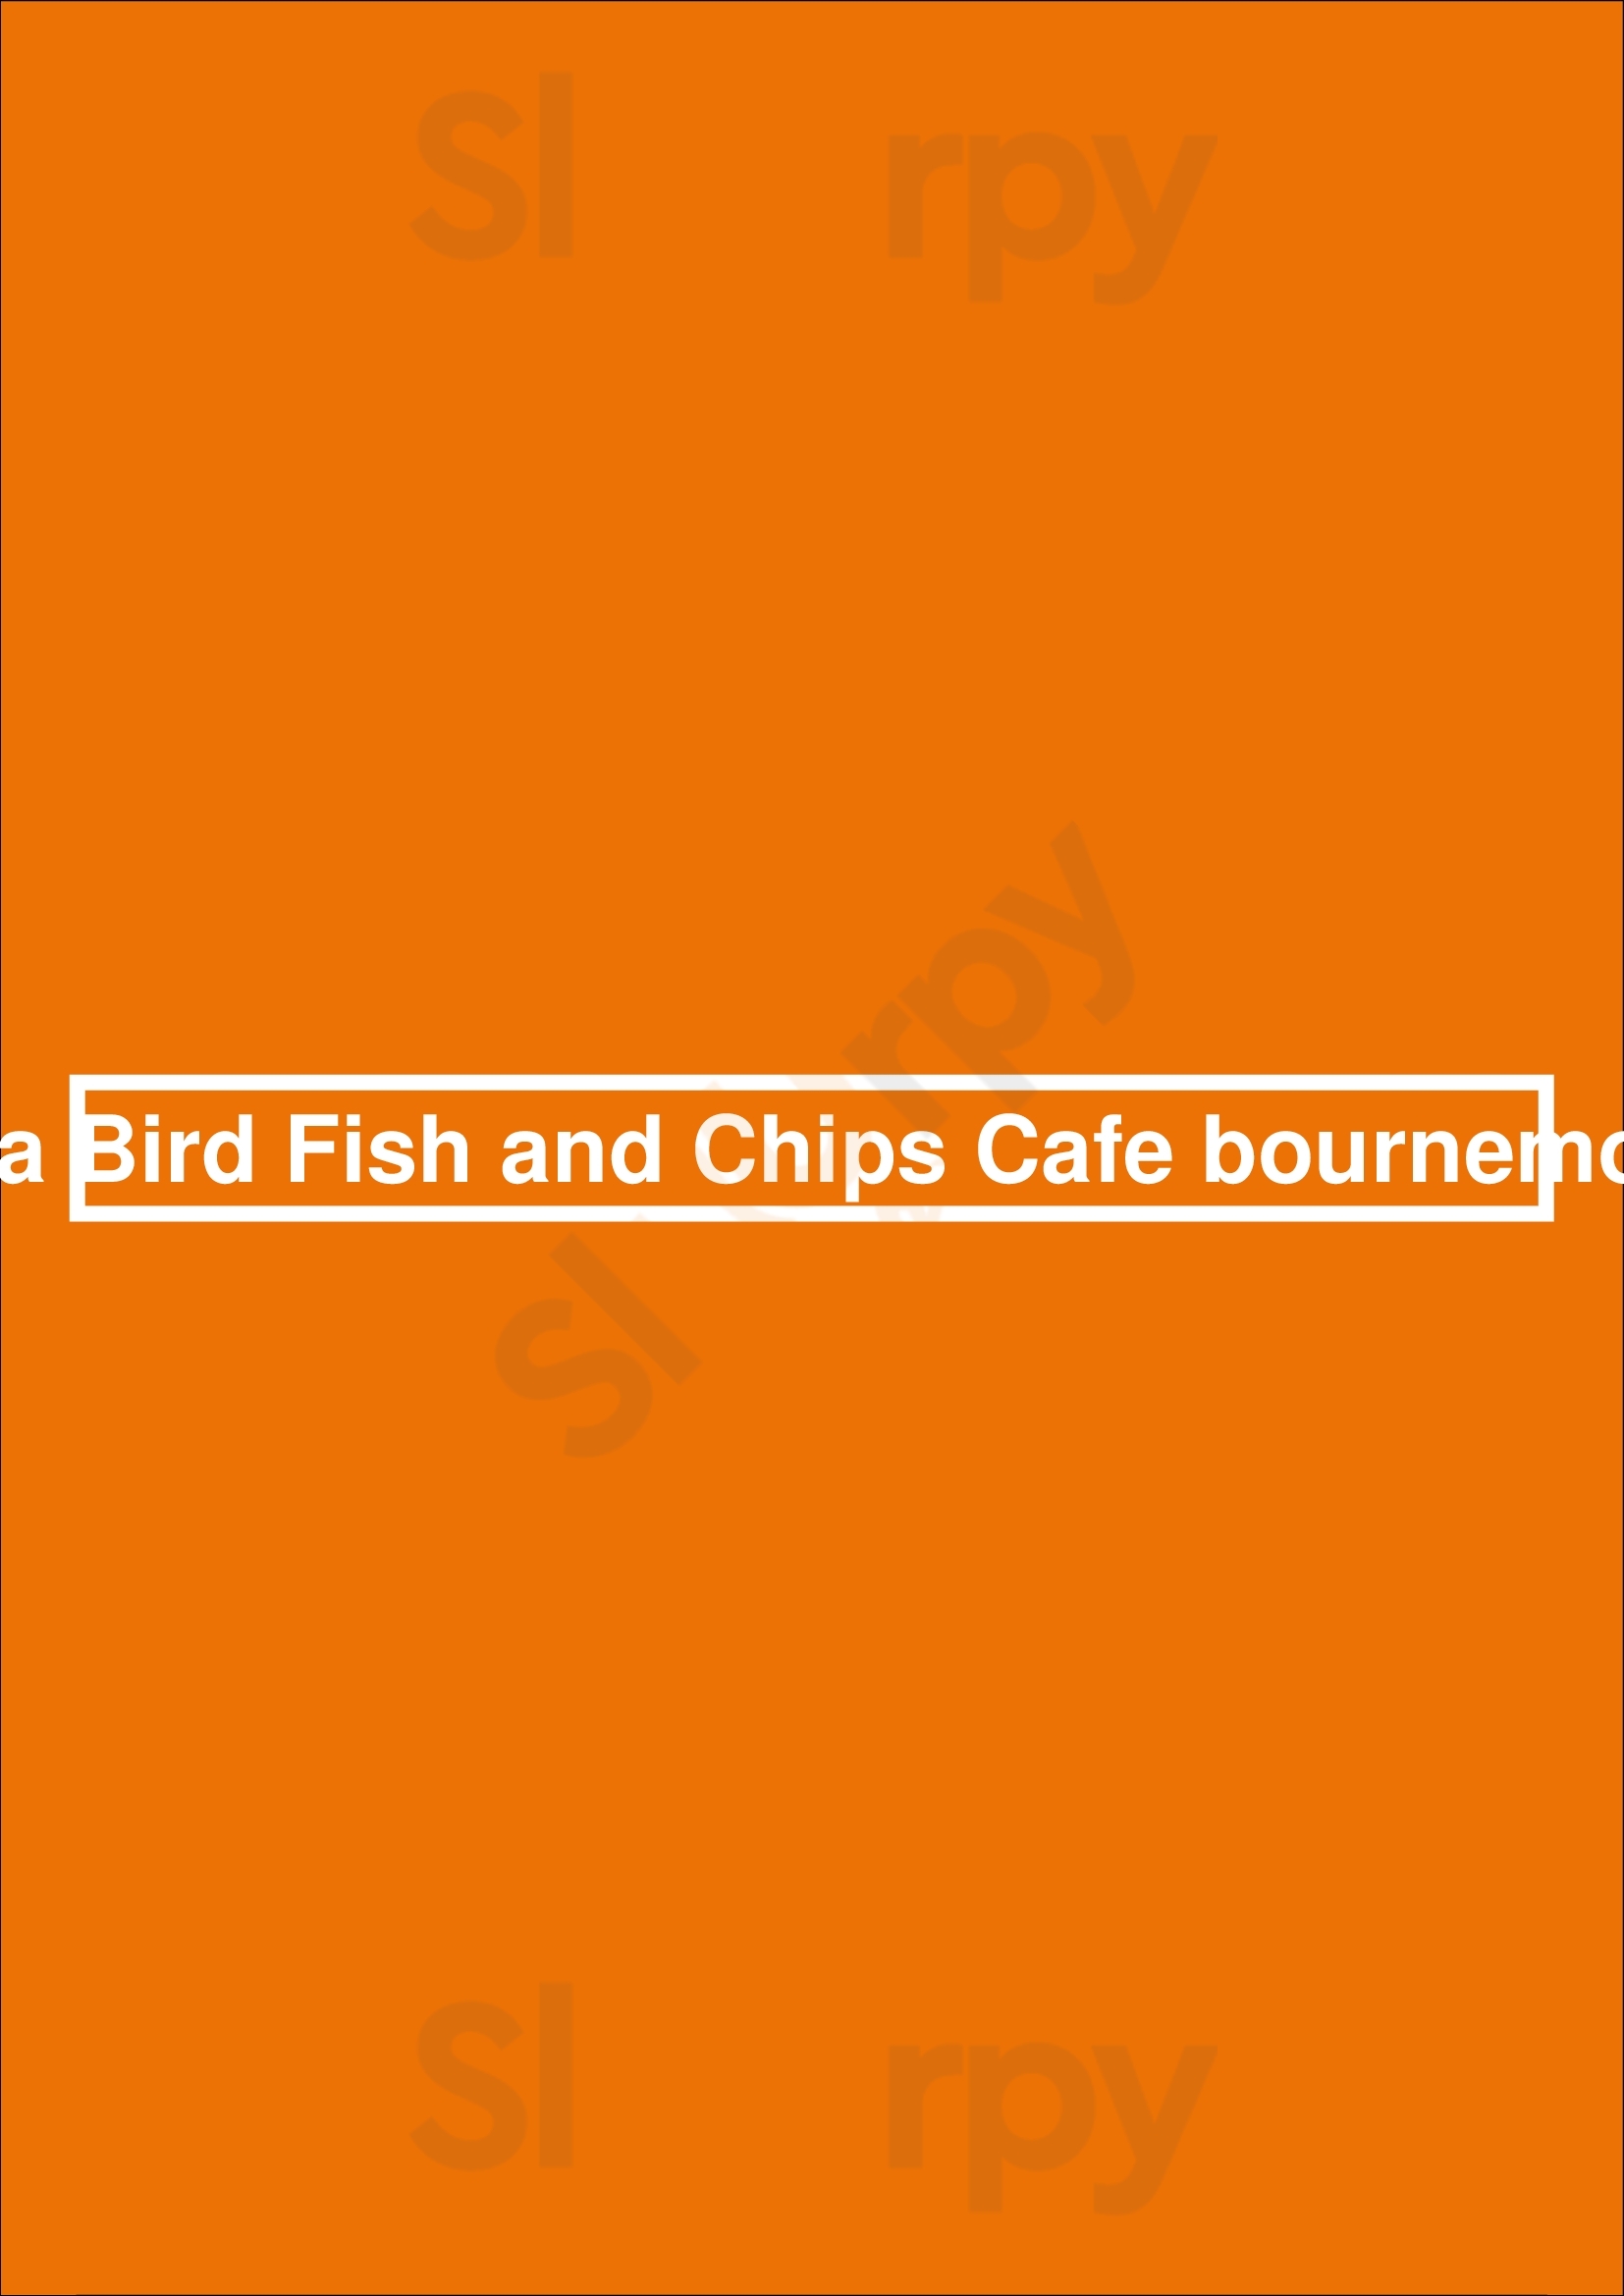 Sea Bird Fish And Chips Cafe Bournemoth Bournemouth Menu - 1